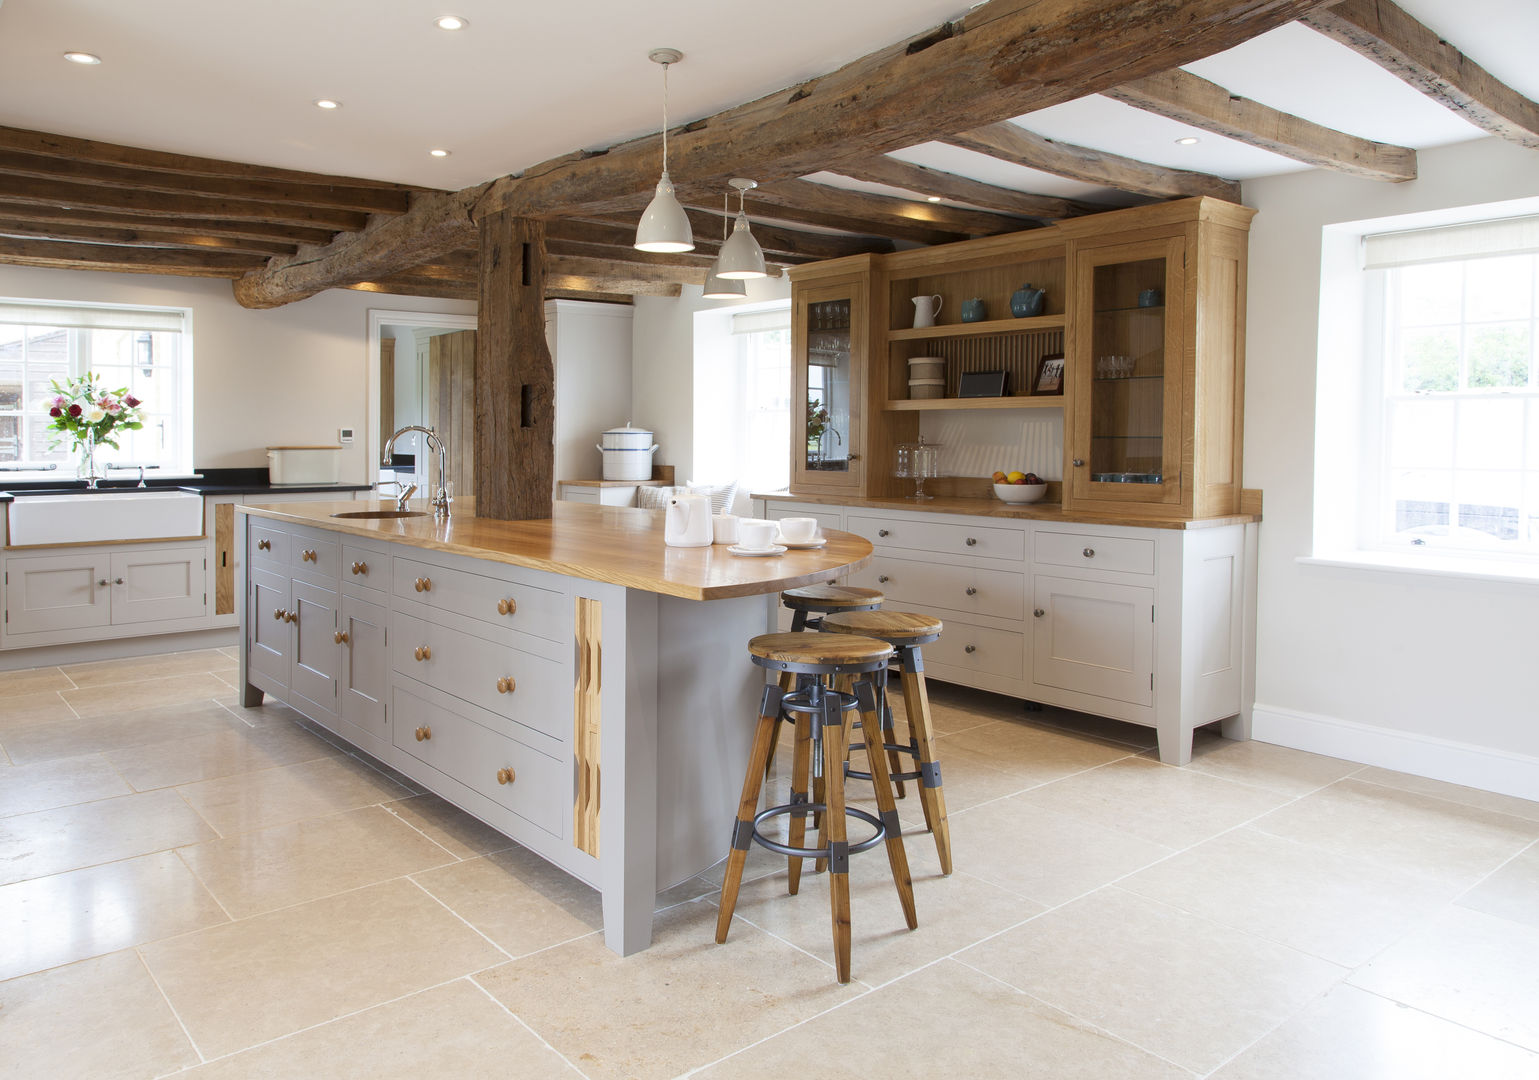 Old English - Bespoke kitchen project in Cambridgeshire Baker & Baker ラスティックデザインの キッチン dresser,kitchen island,seating,tile flooring,beams,lighting